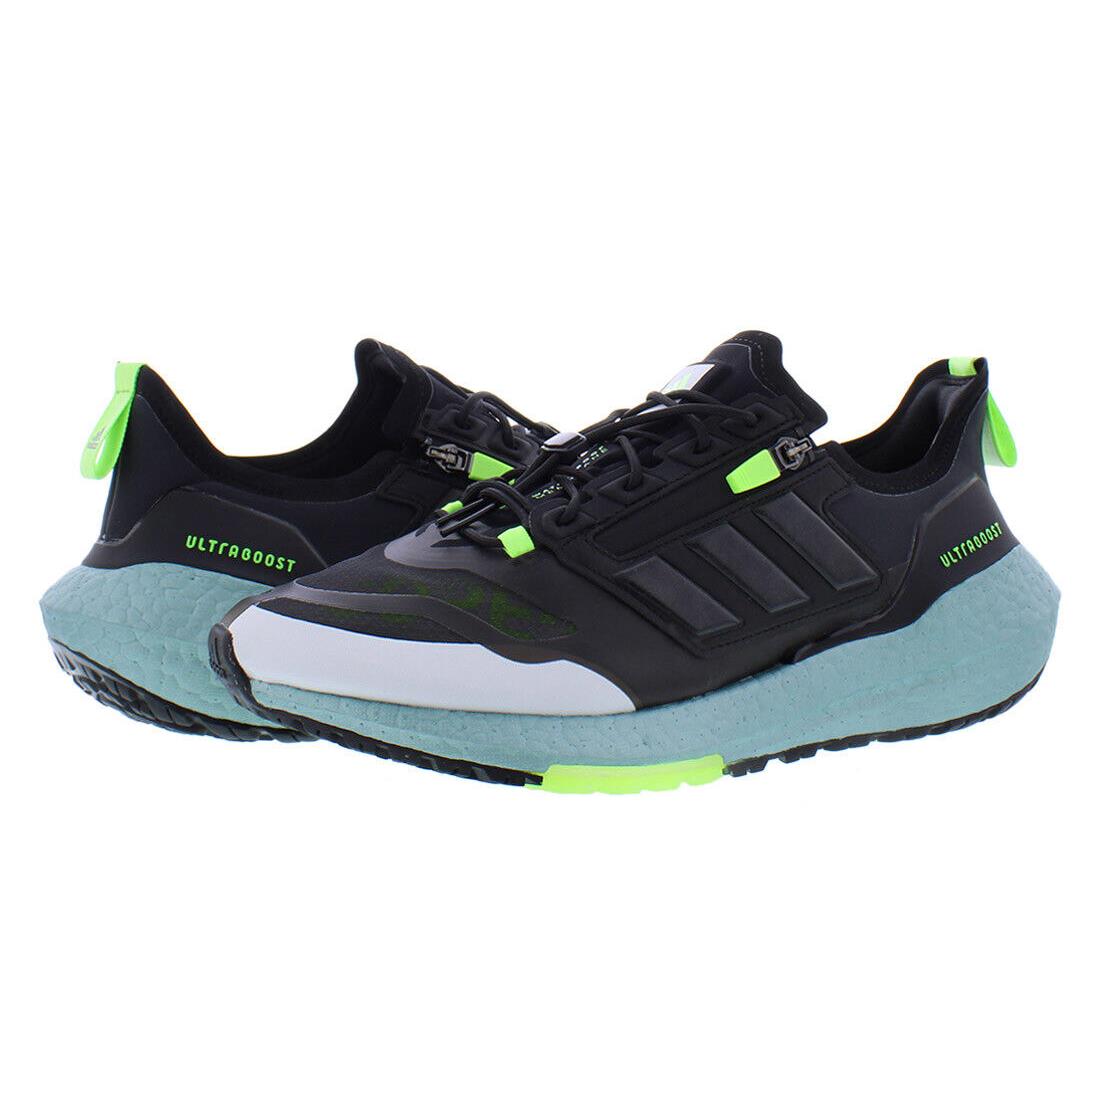 Adidas Ultraboost 21 Gtx Mens Shoes - Black/Green, Main: Black